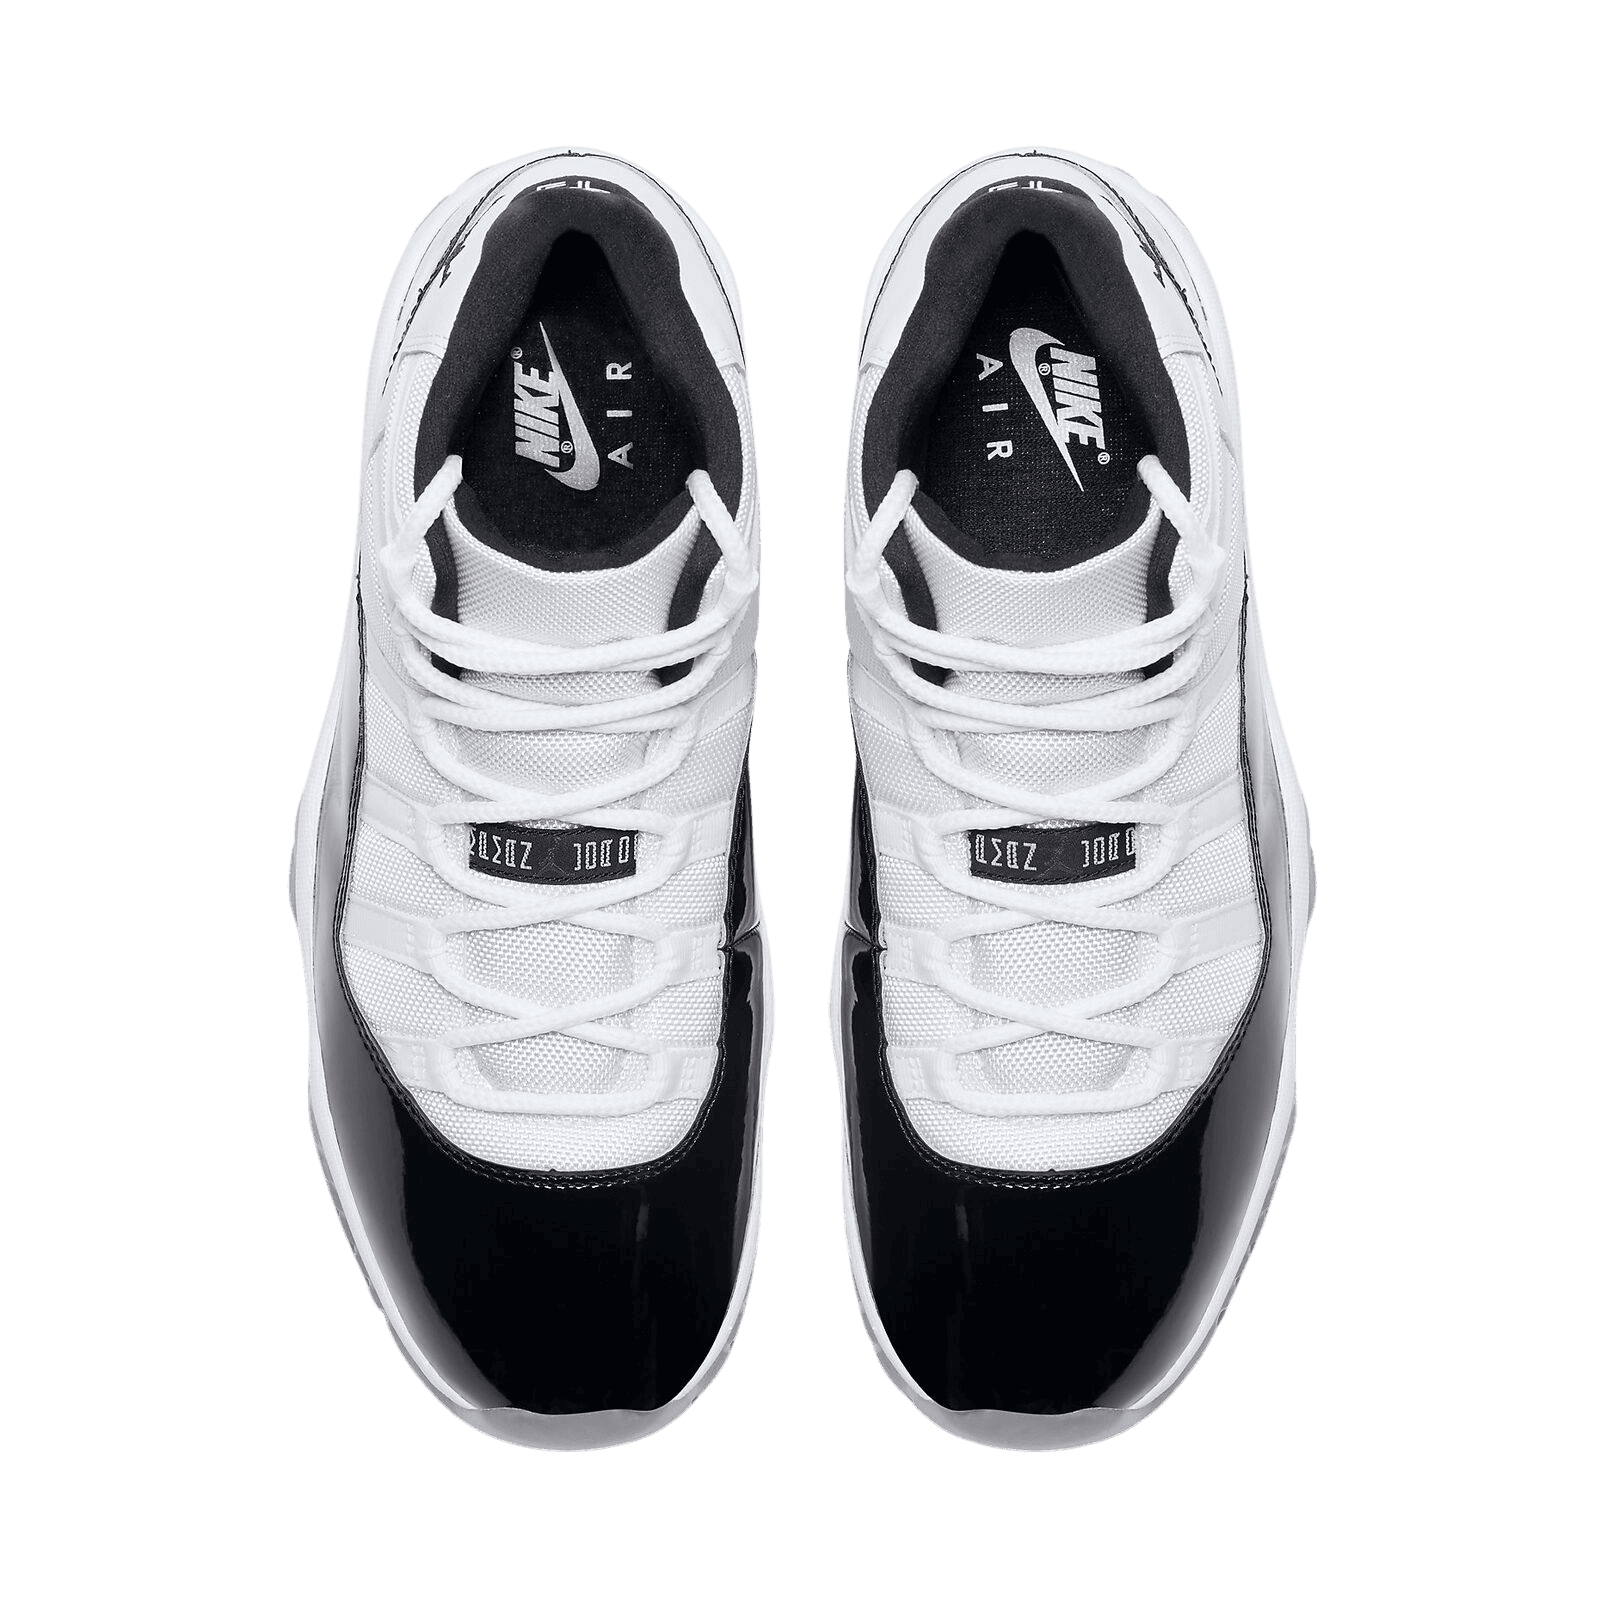 How the 'Concord' Air Jordan 11 became sneaker culture's grail